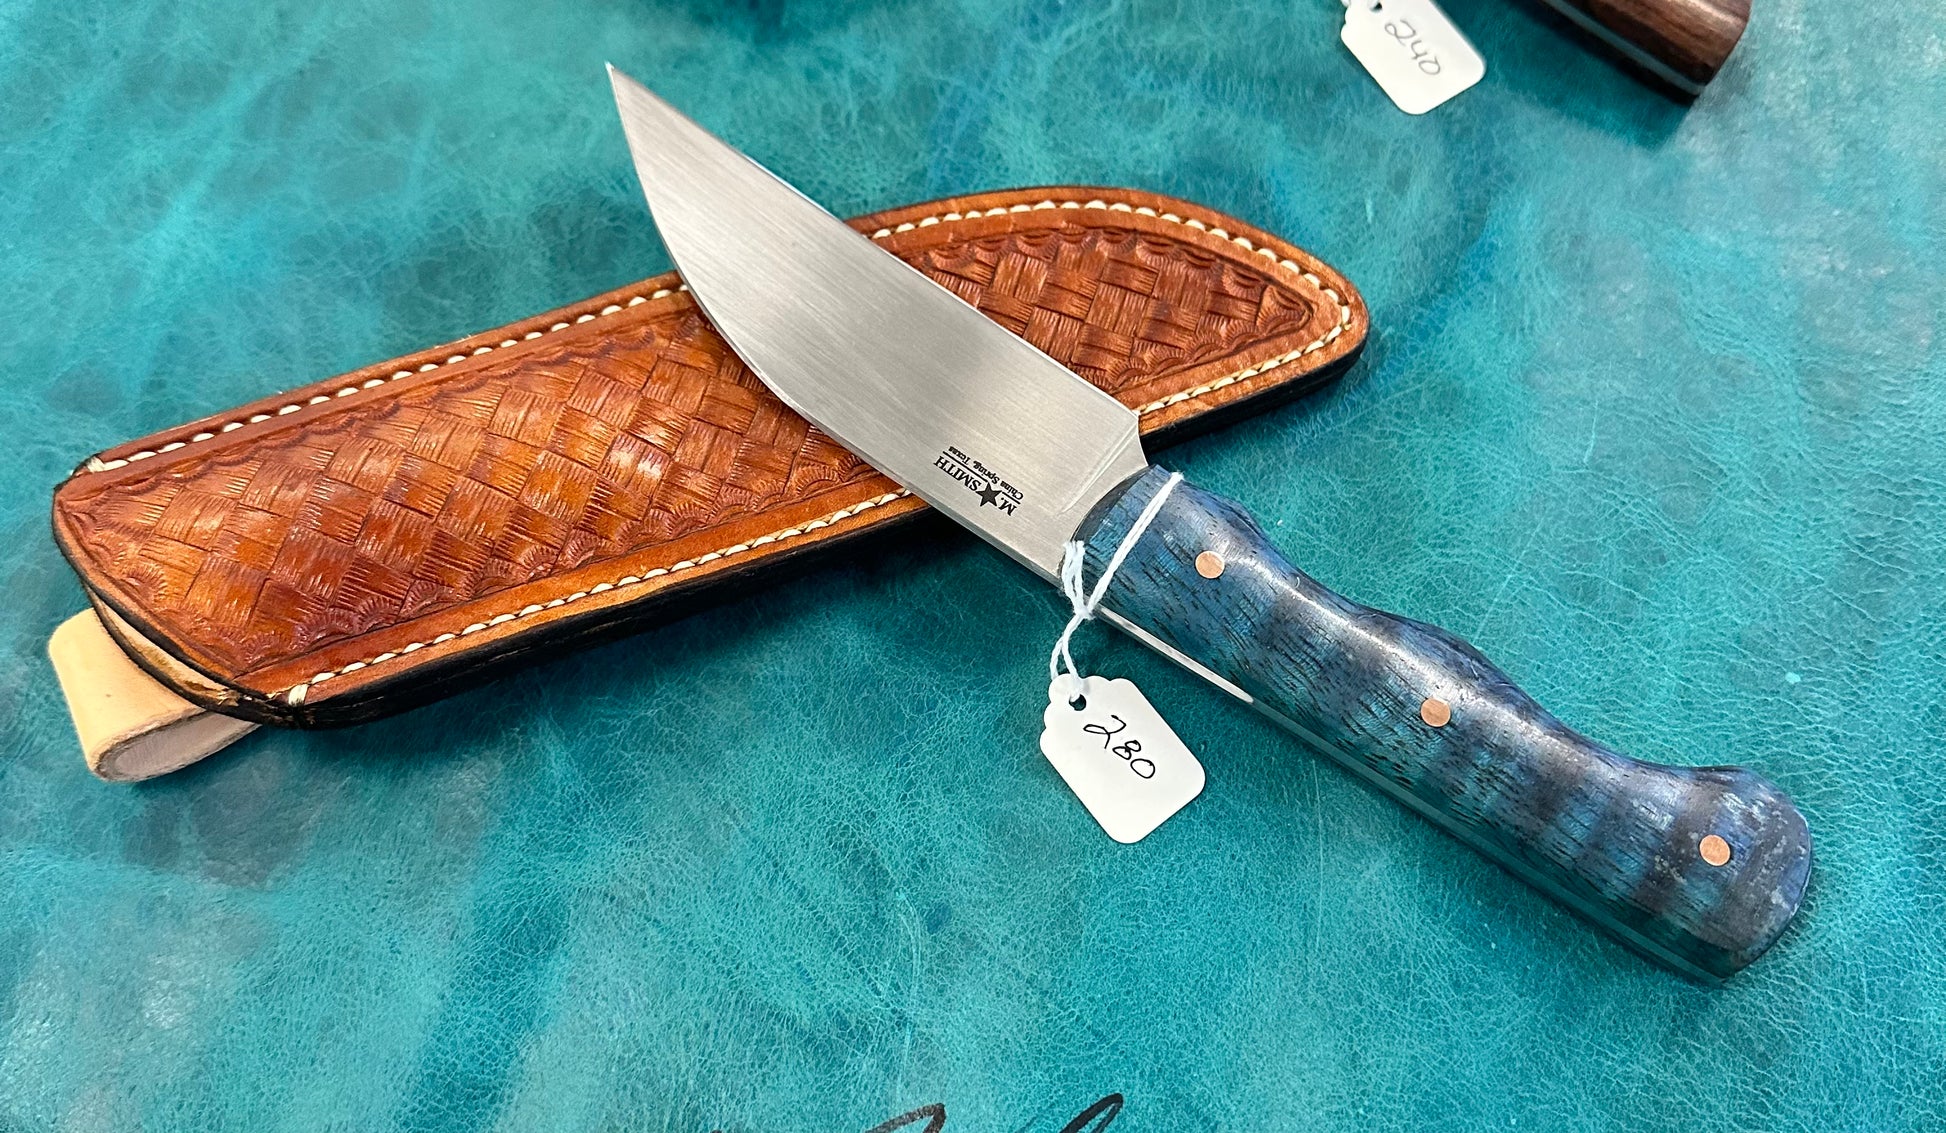 The NRSSBK Chef knife – Mark Smith Knives